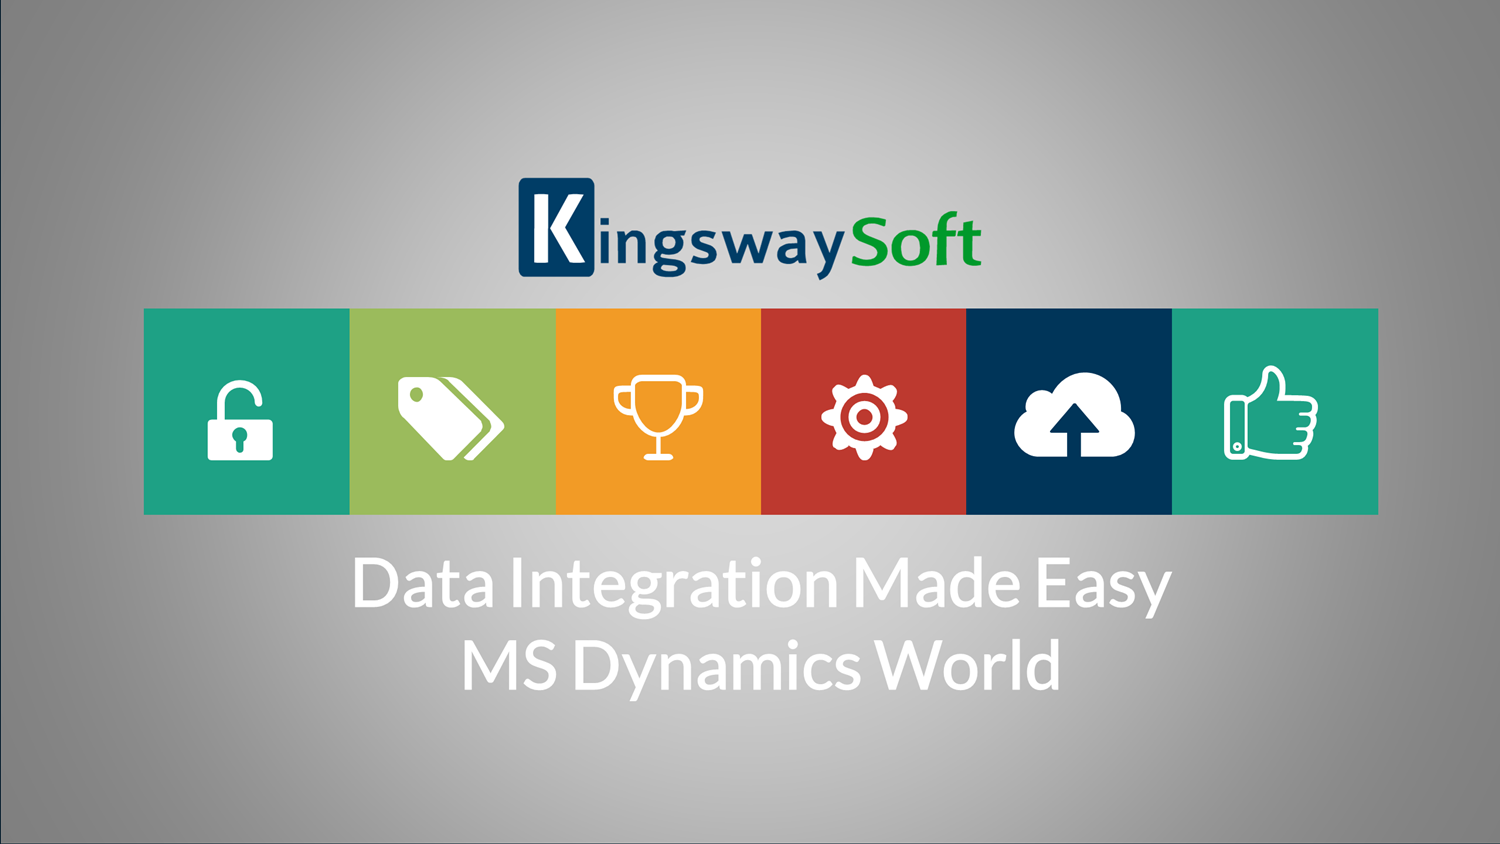 KingswaySoft Webcast: Solving Your Data Integration Challenges - January 14, 2020